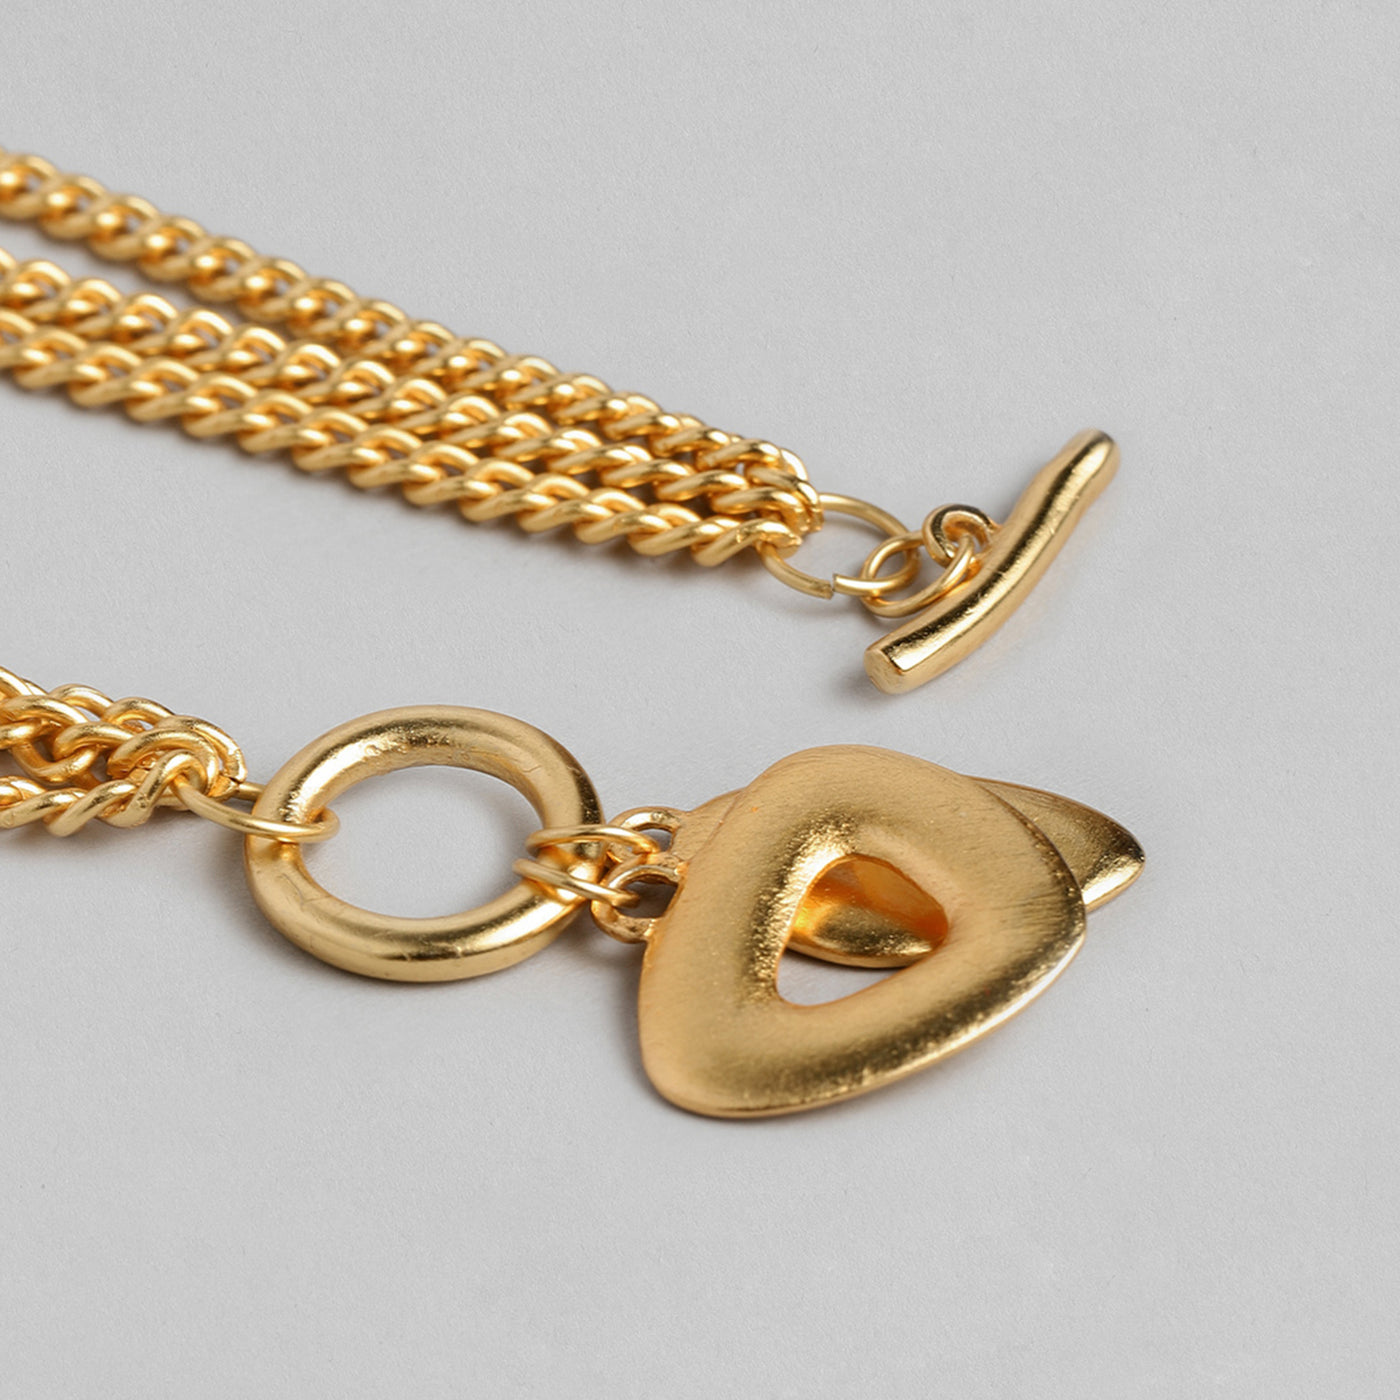 Estele Gold Plated Charm Designer Necklace Set for Women